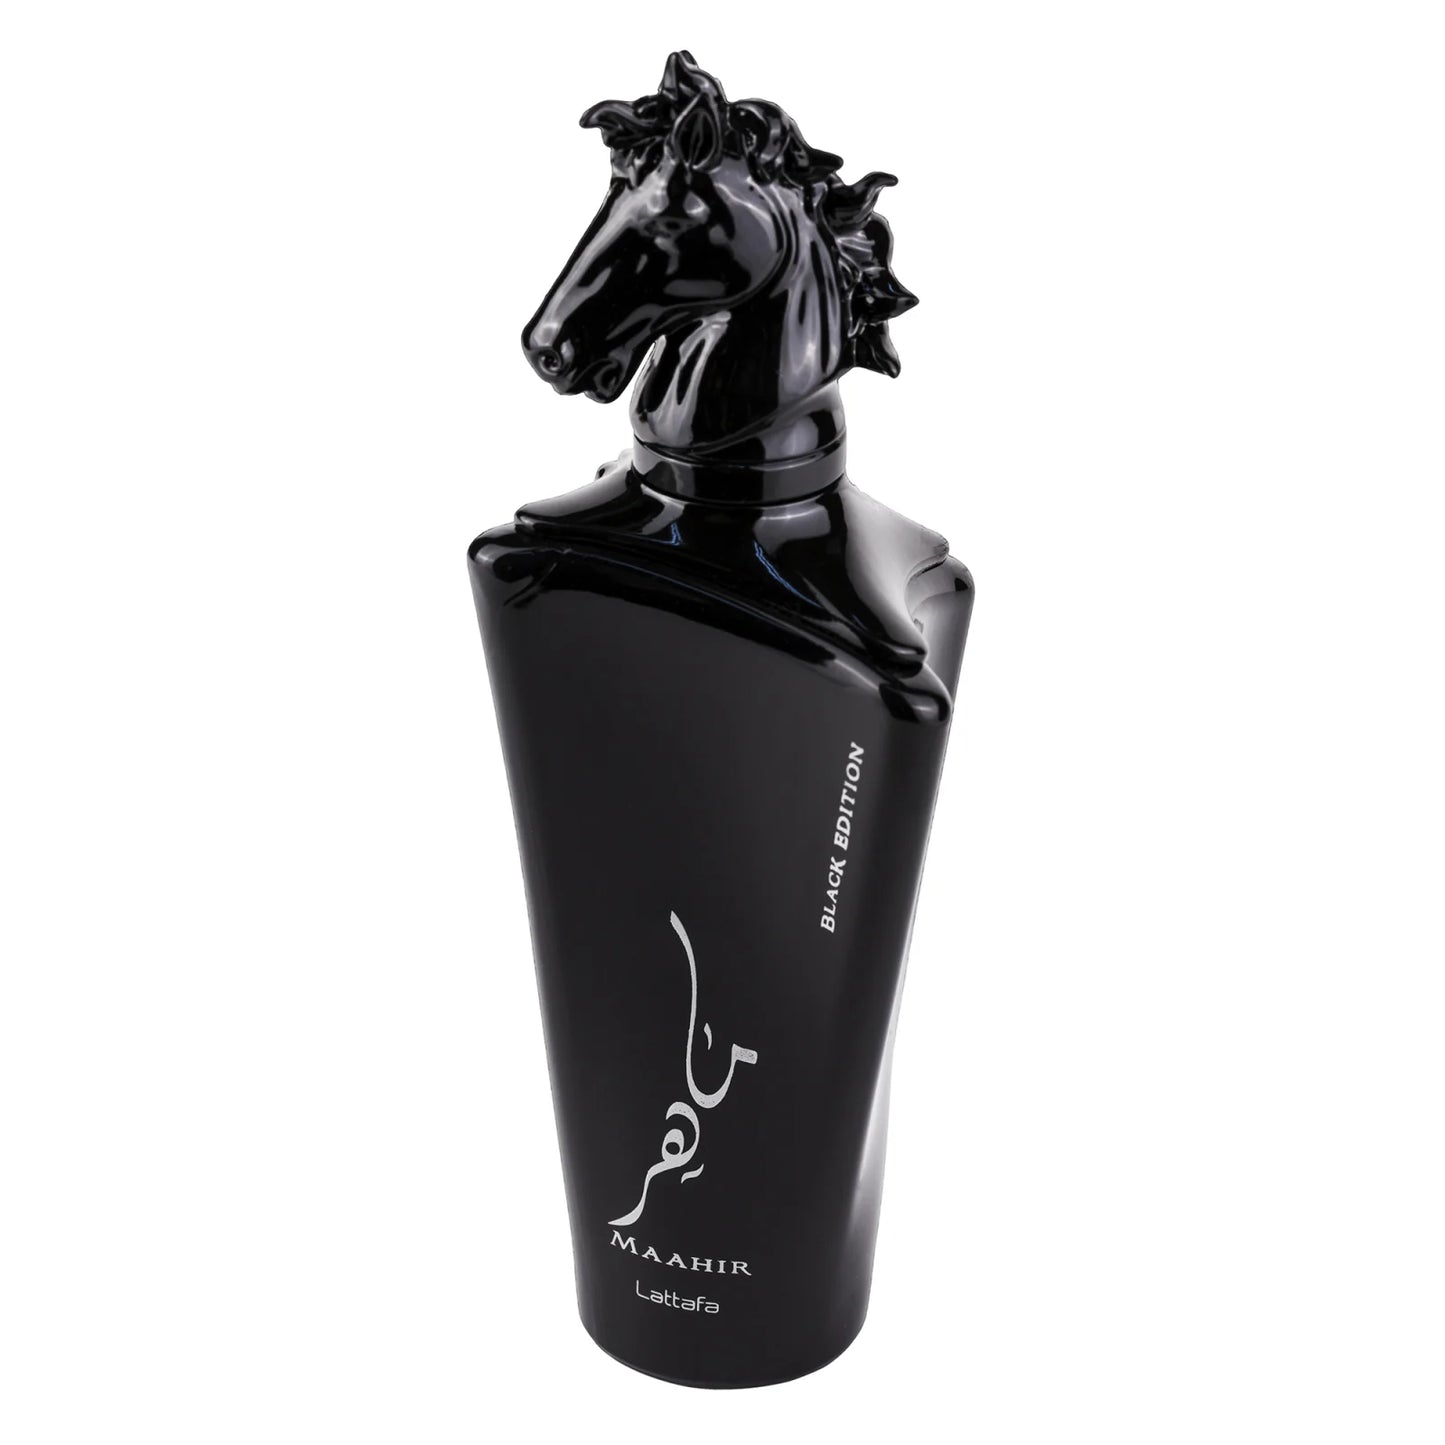 Parfum arabesc Maahir Black Edition, Lattafa, apa de parfum 100 ml, barbat